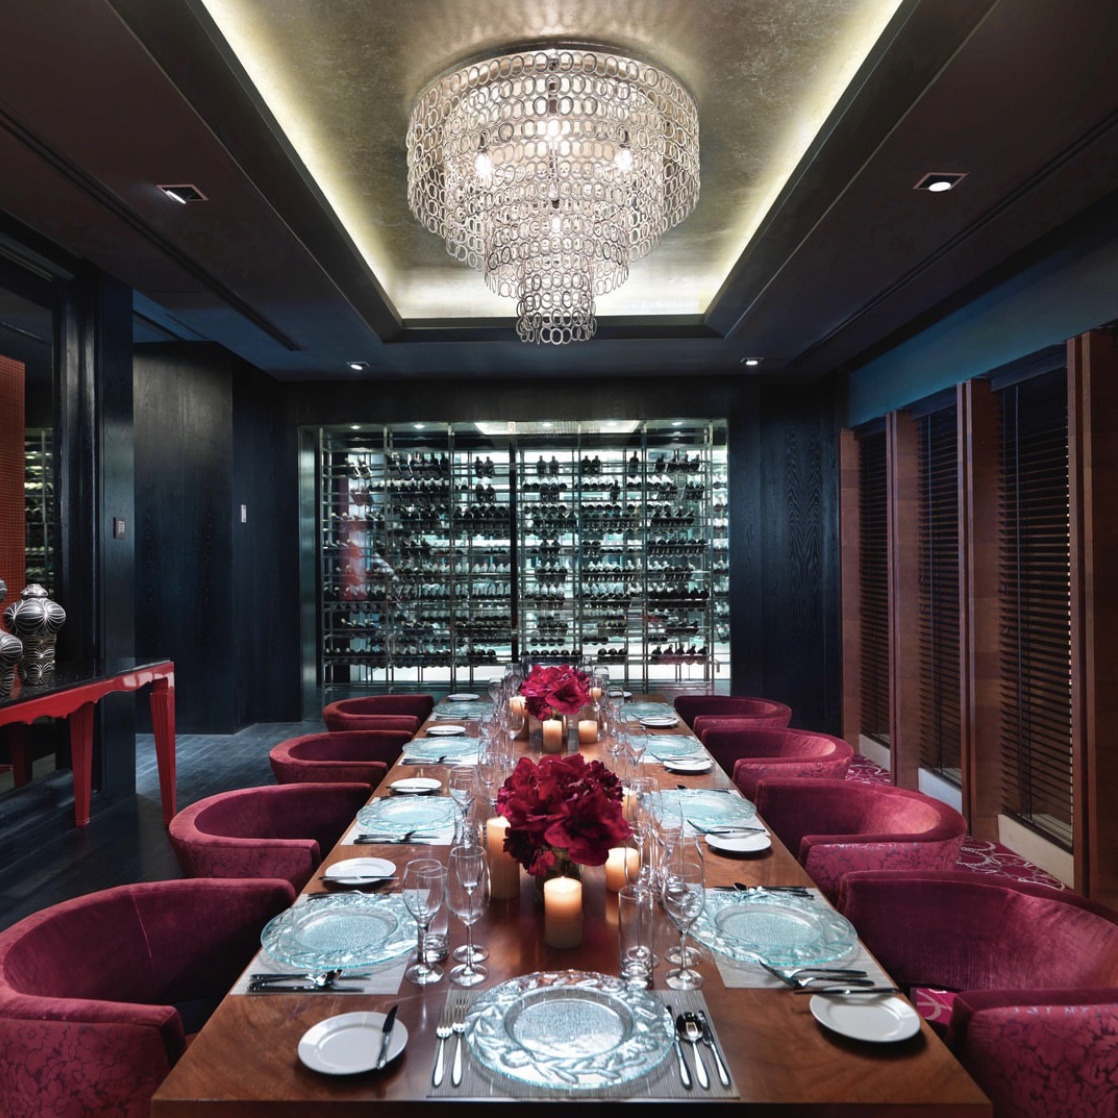 viva magenta home - dining room in magenta black red pink color design interior